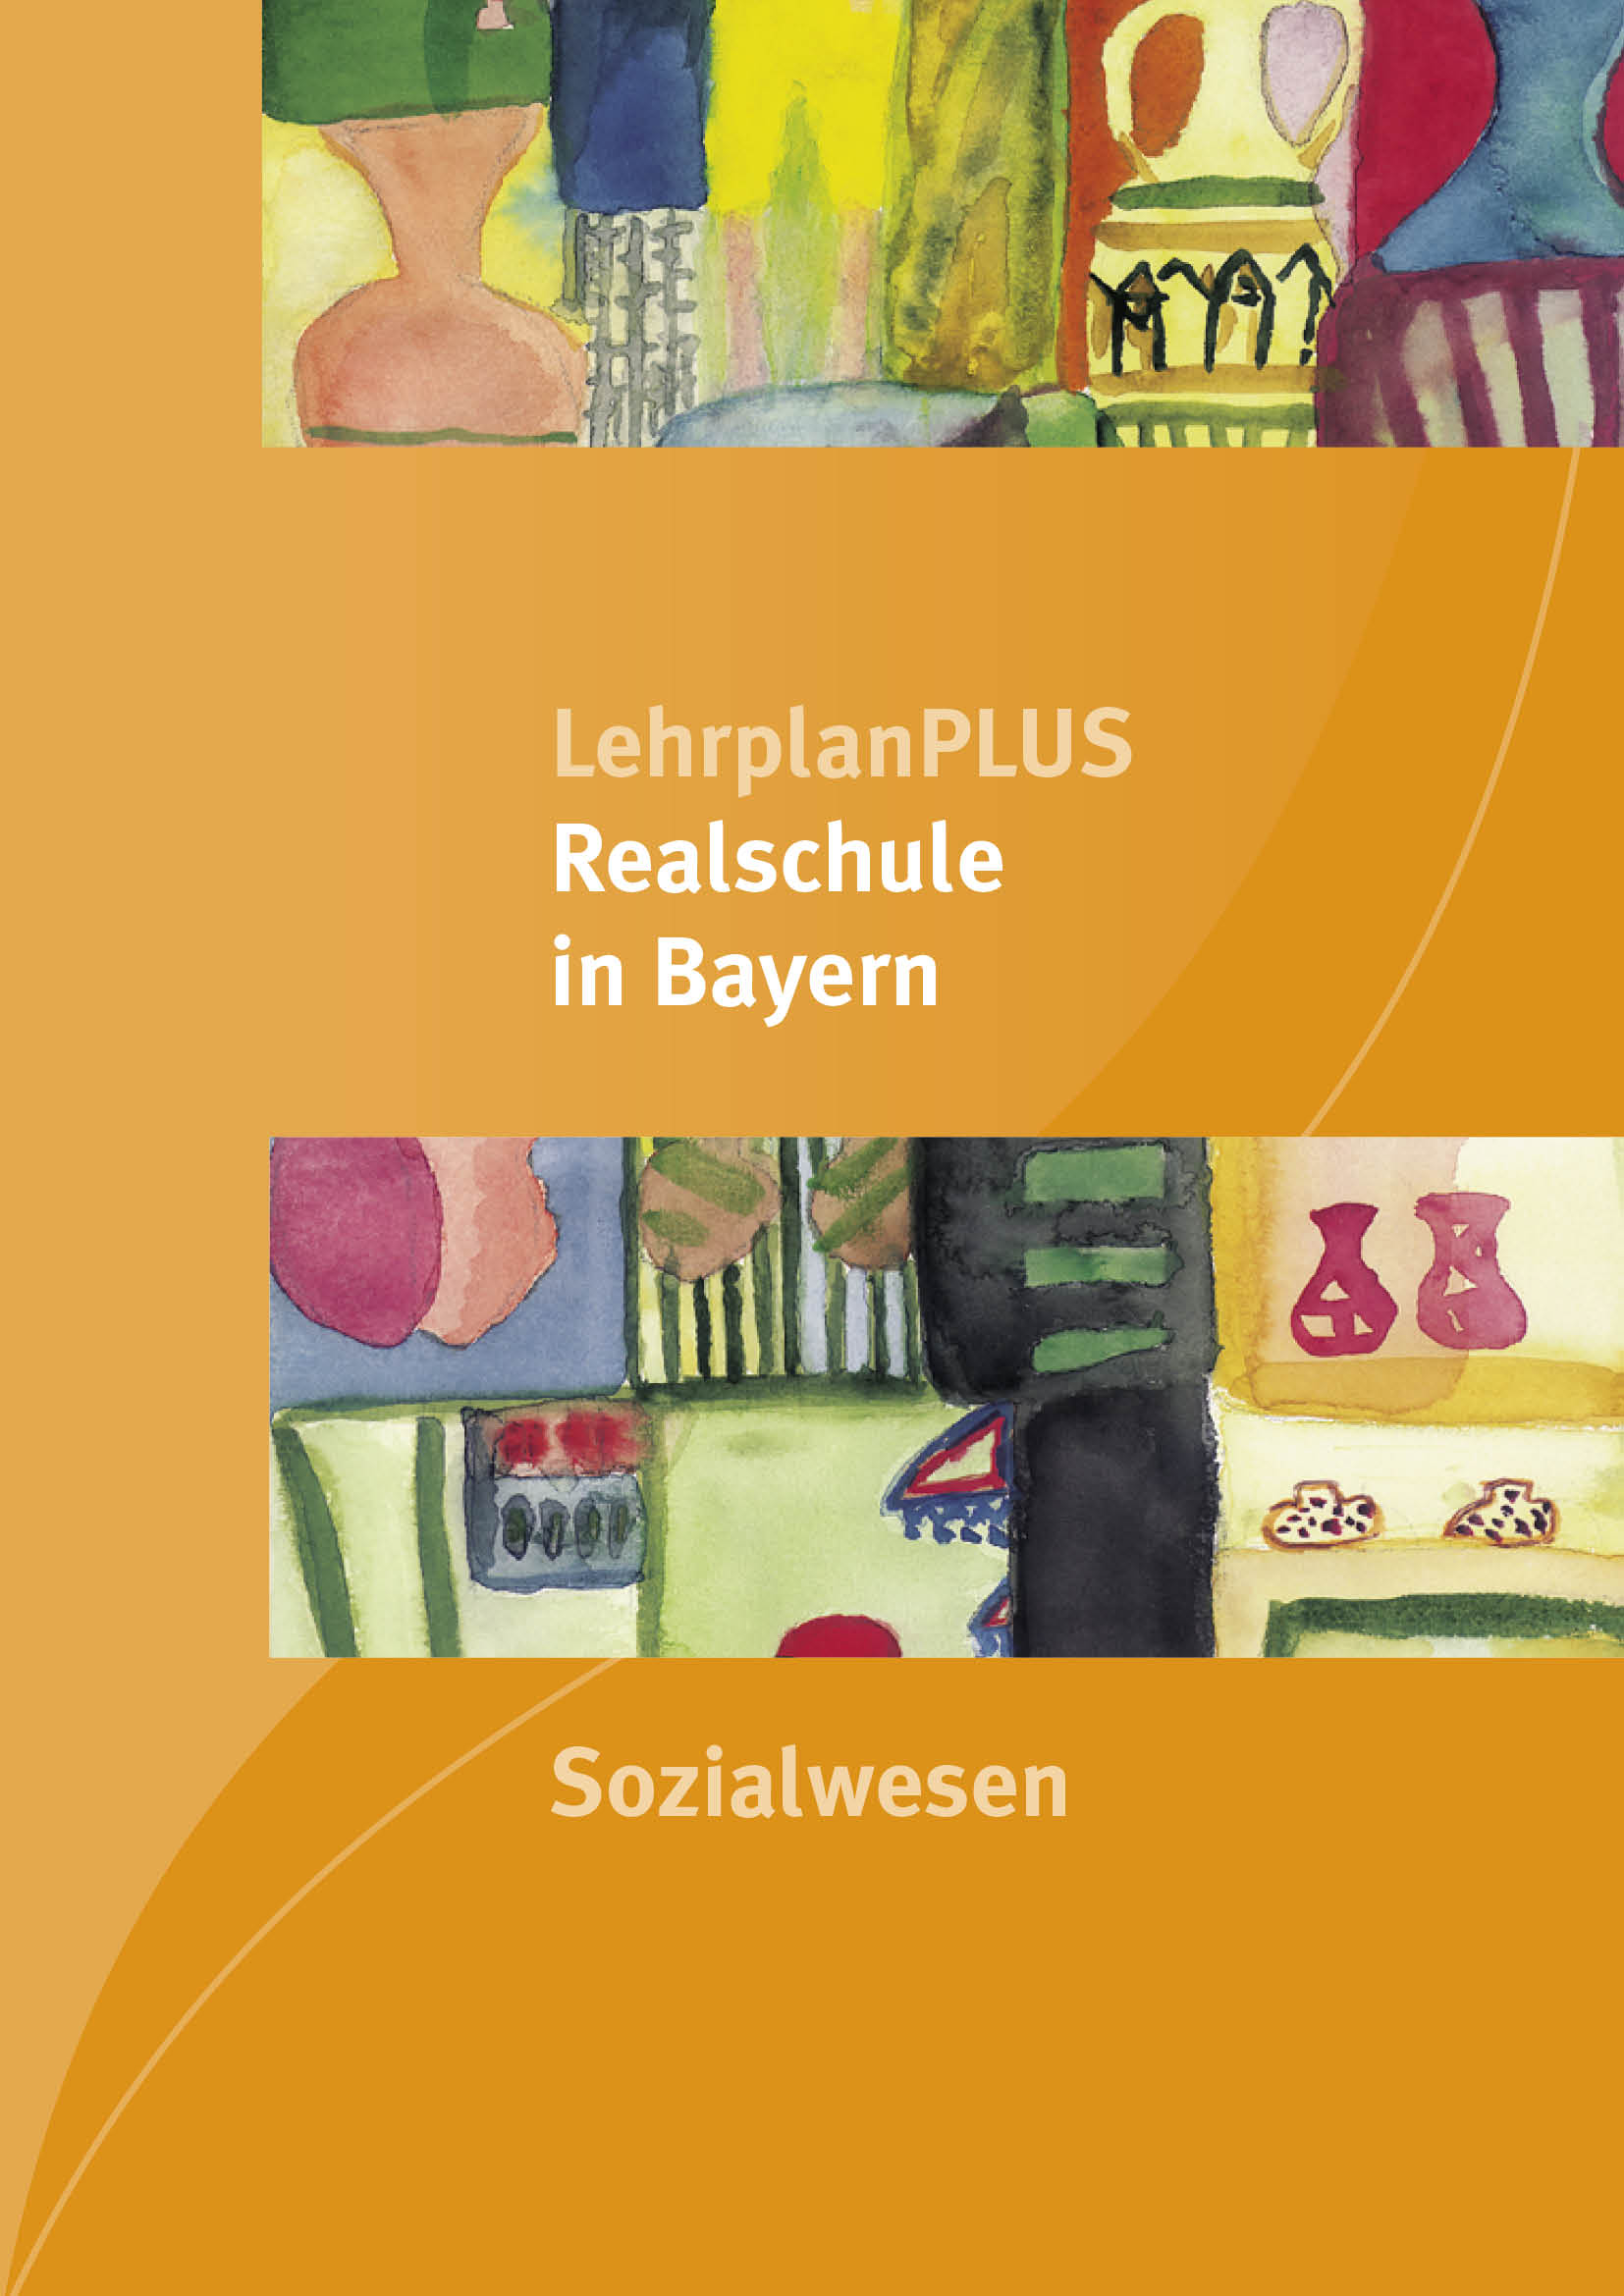 LehrplanPLUS Realschule in Bayern - Sozialwesen